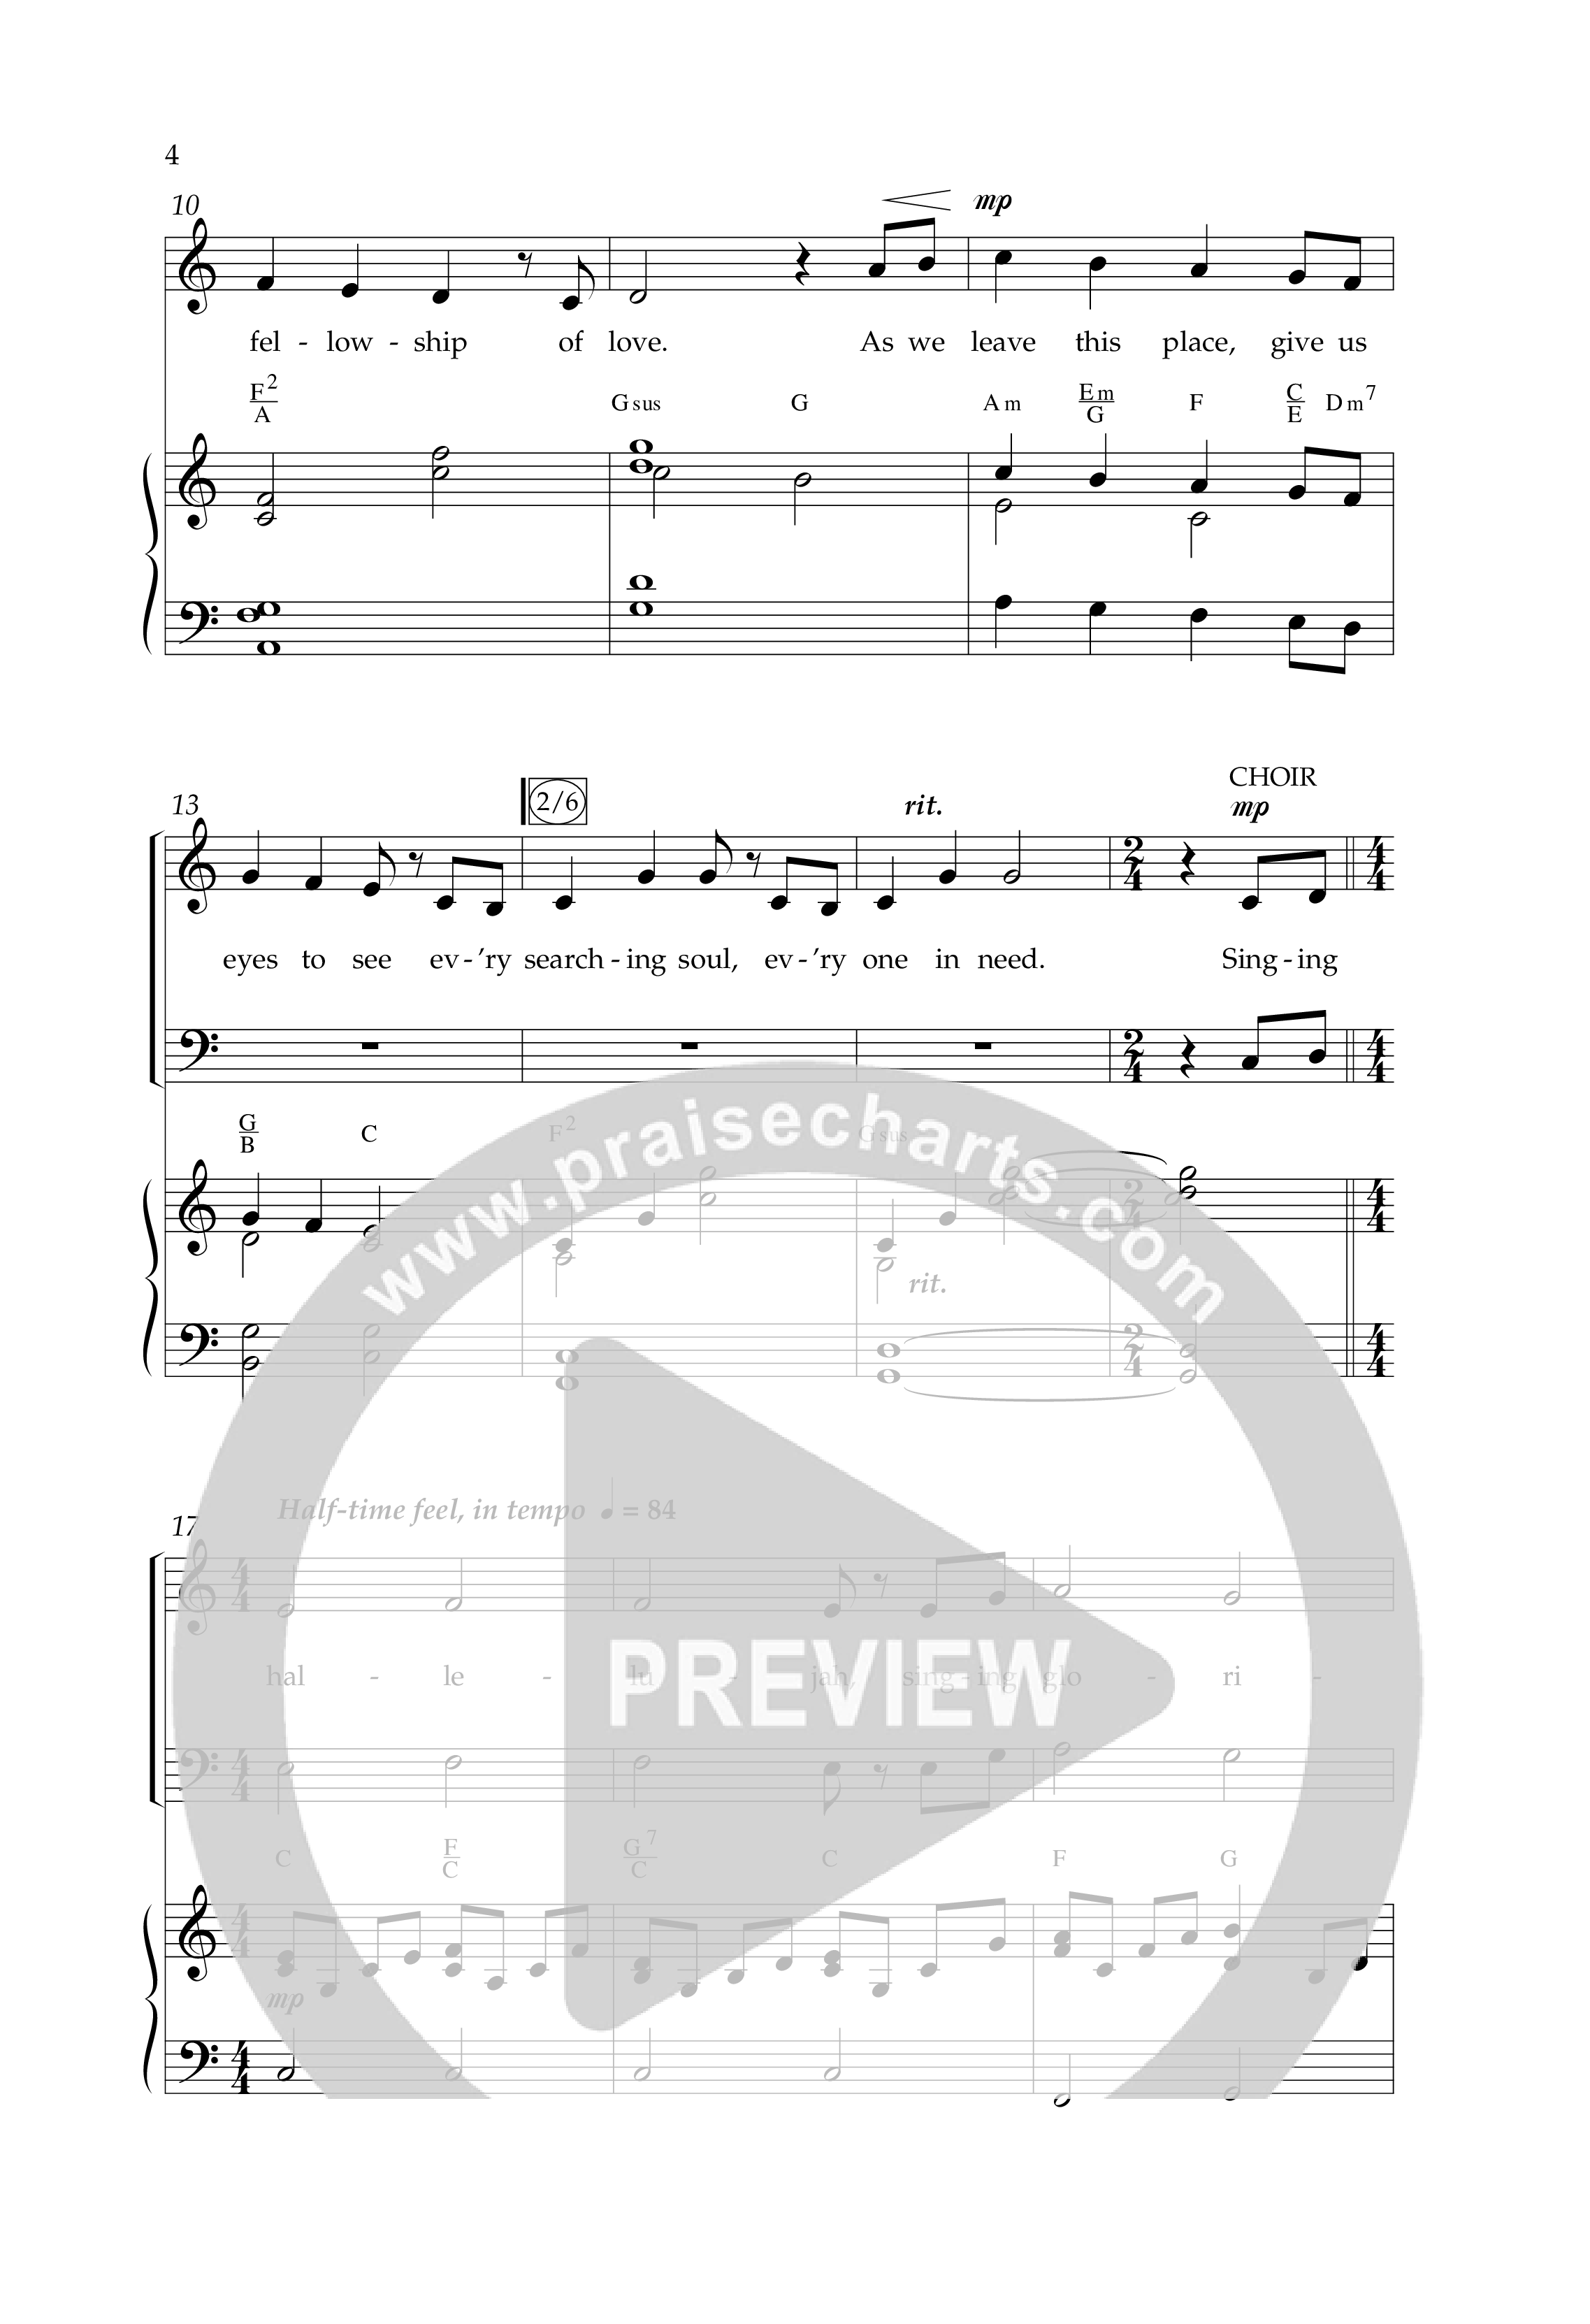 Our Last Amen (Choral Anthem SATB) Anthem (SATB/Piano) (Lifeway Choral / Arr. Phillip Keveren)